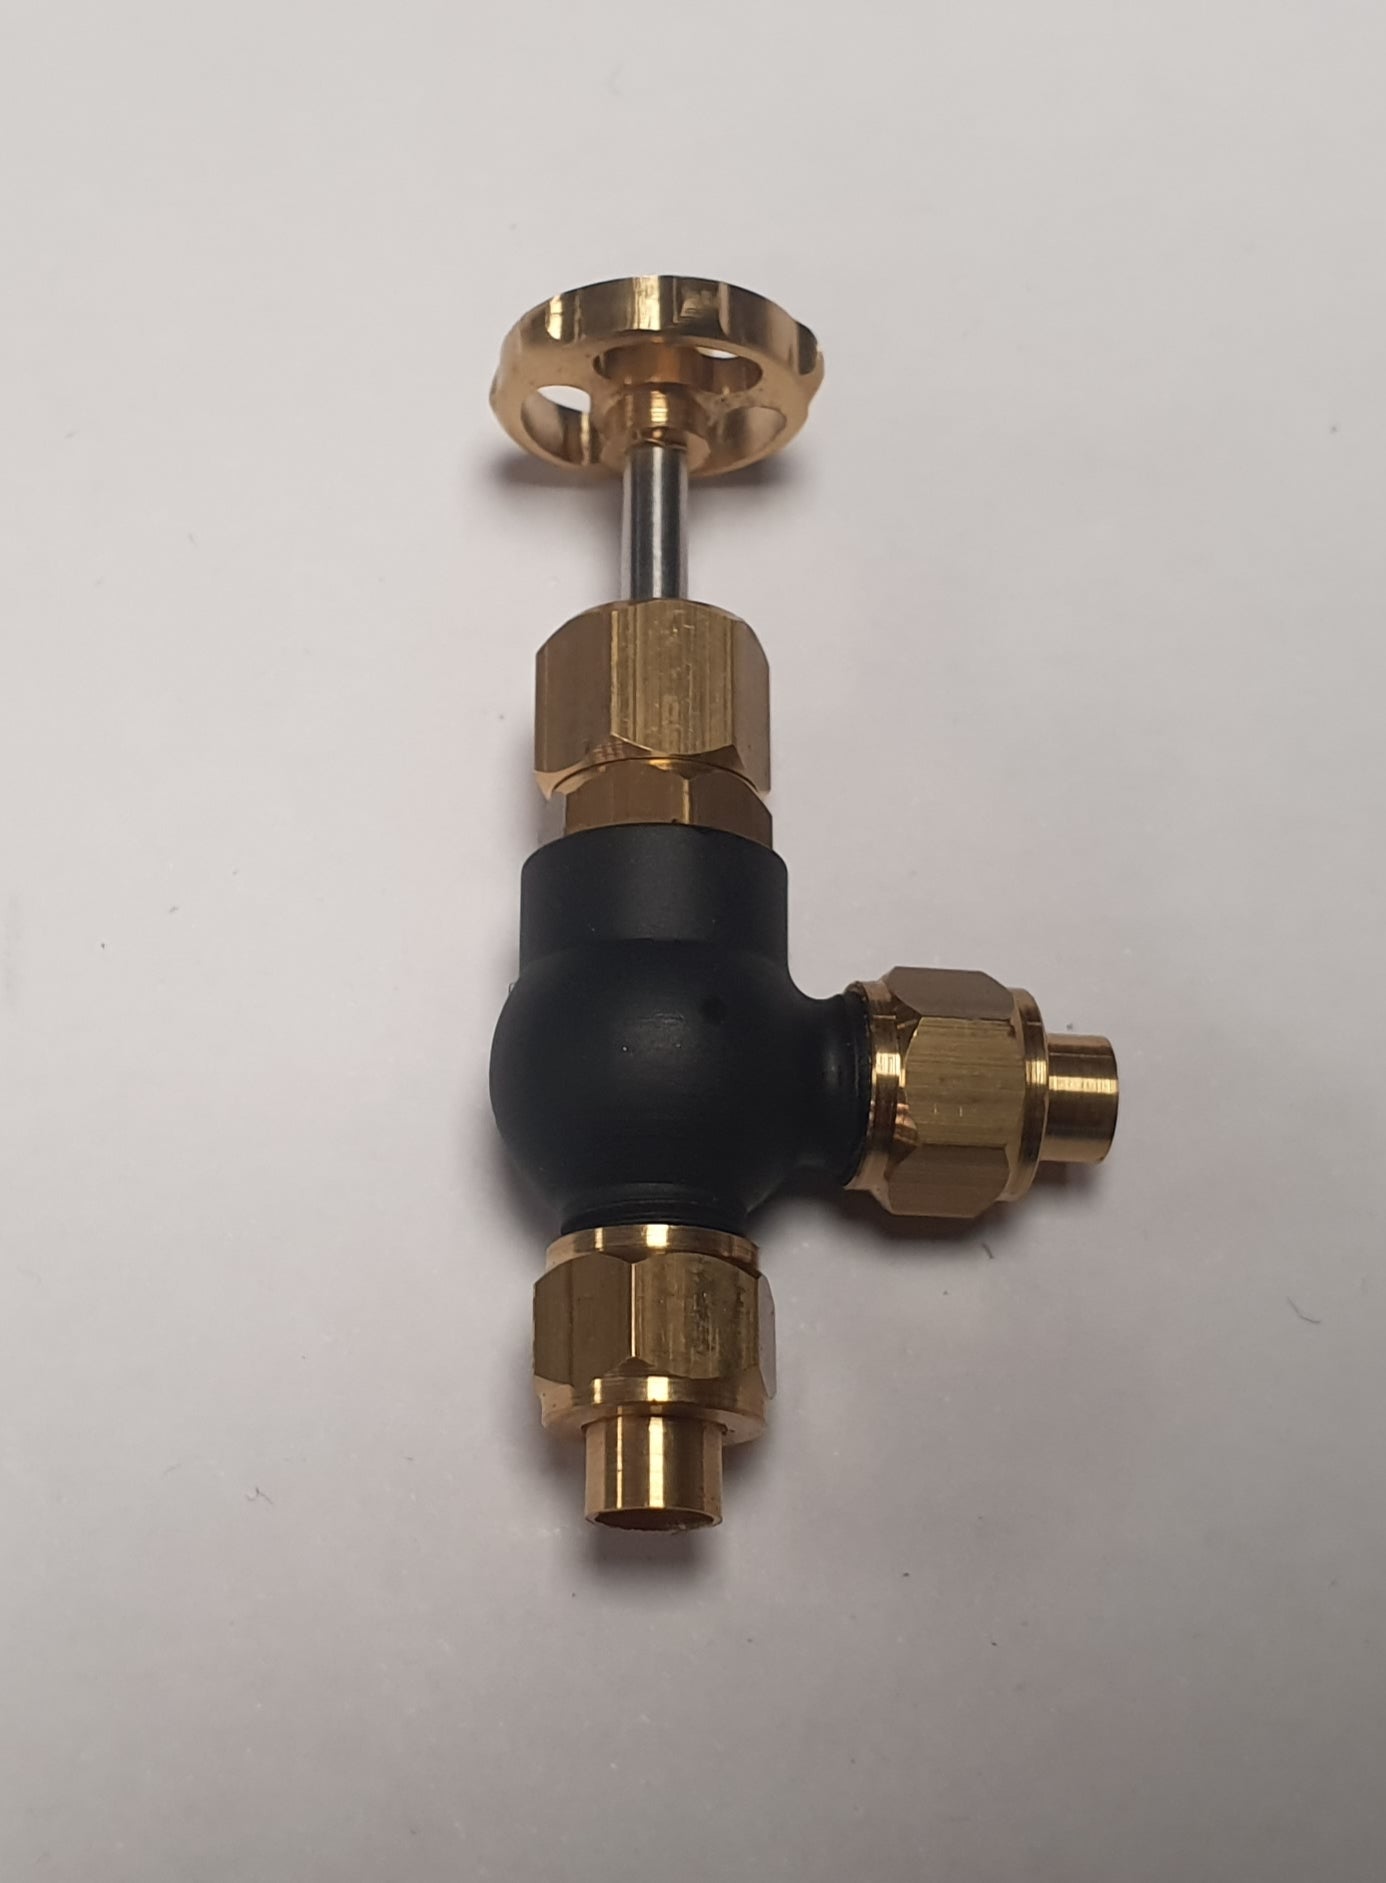 Tony Green Steam Fittings : 3/16th 90 degree globe valve  - G192A